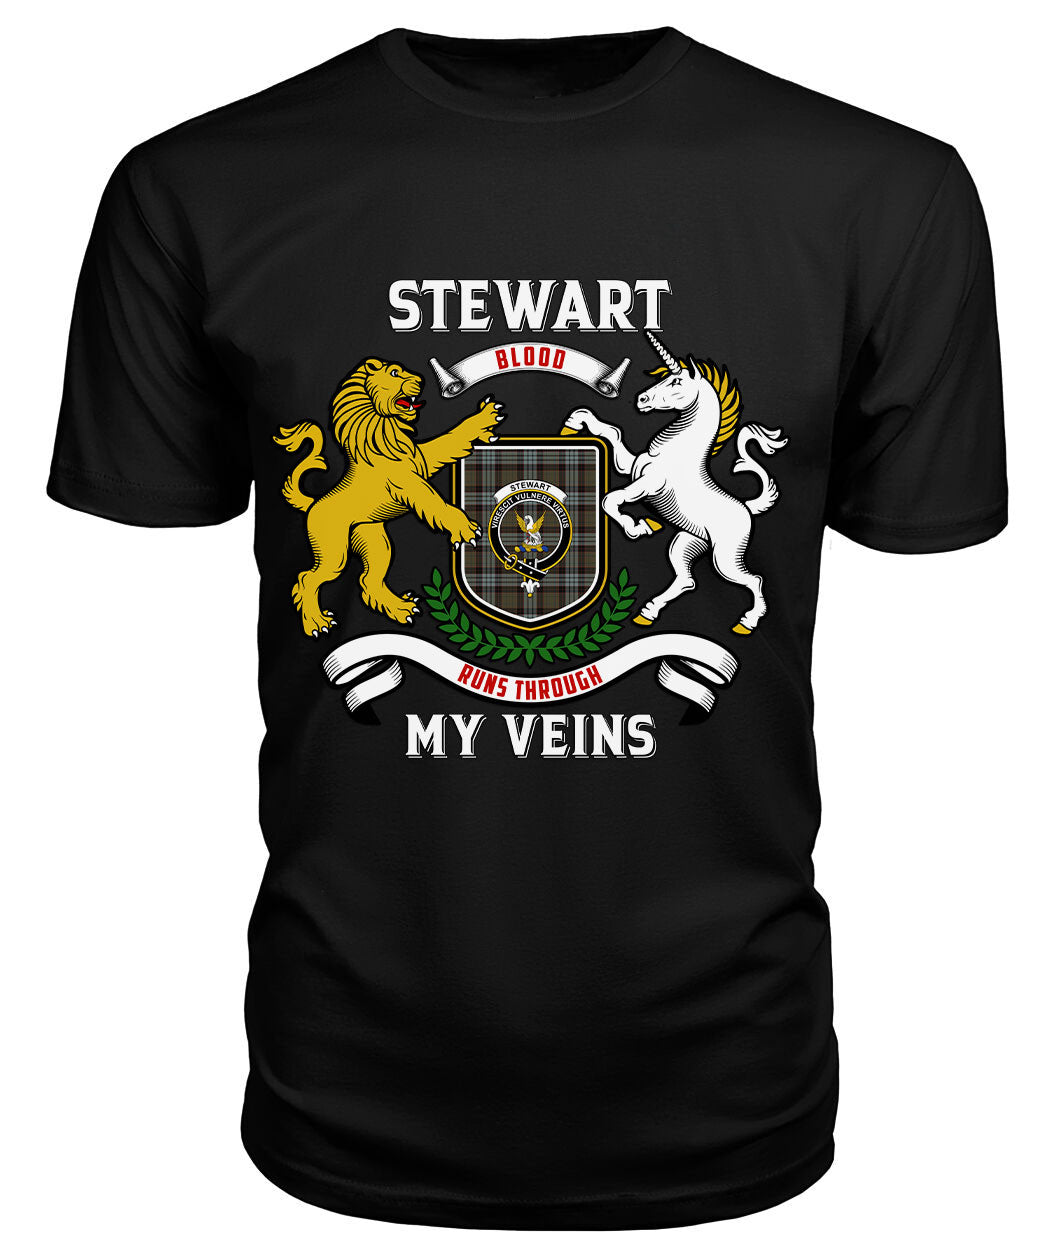 Stewart Old Weathered Tartan Crest 2D T-shirt - Blood Runs Through My Veins Style